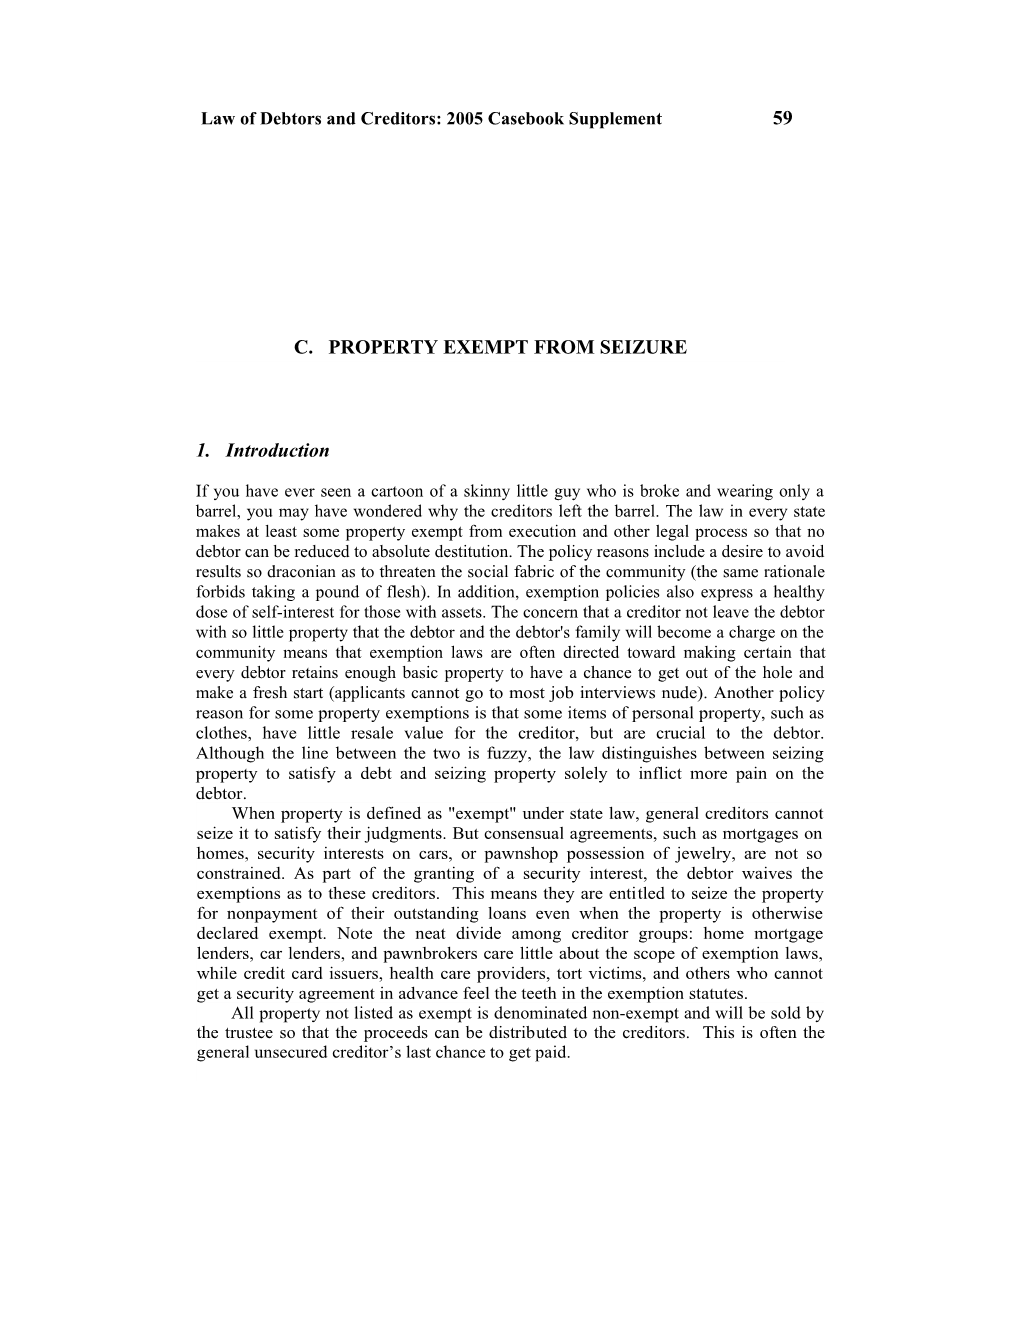 Law Of Debtors And Creditors: 2005 Casebook Supplement 239 C. PROPERTY EXEMPT FROM SEIZURE